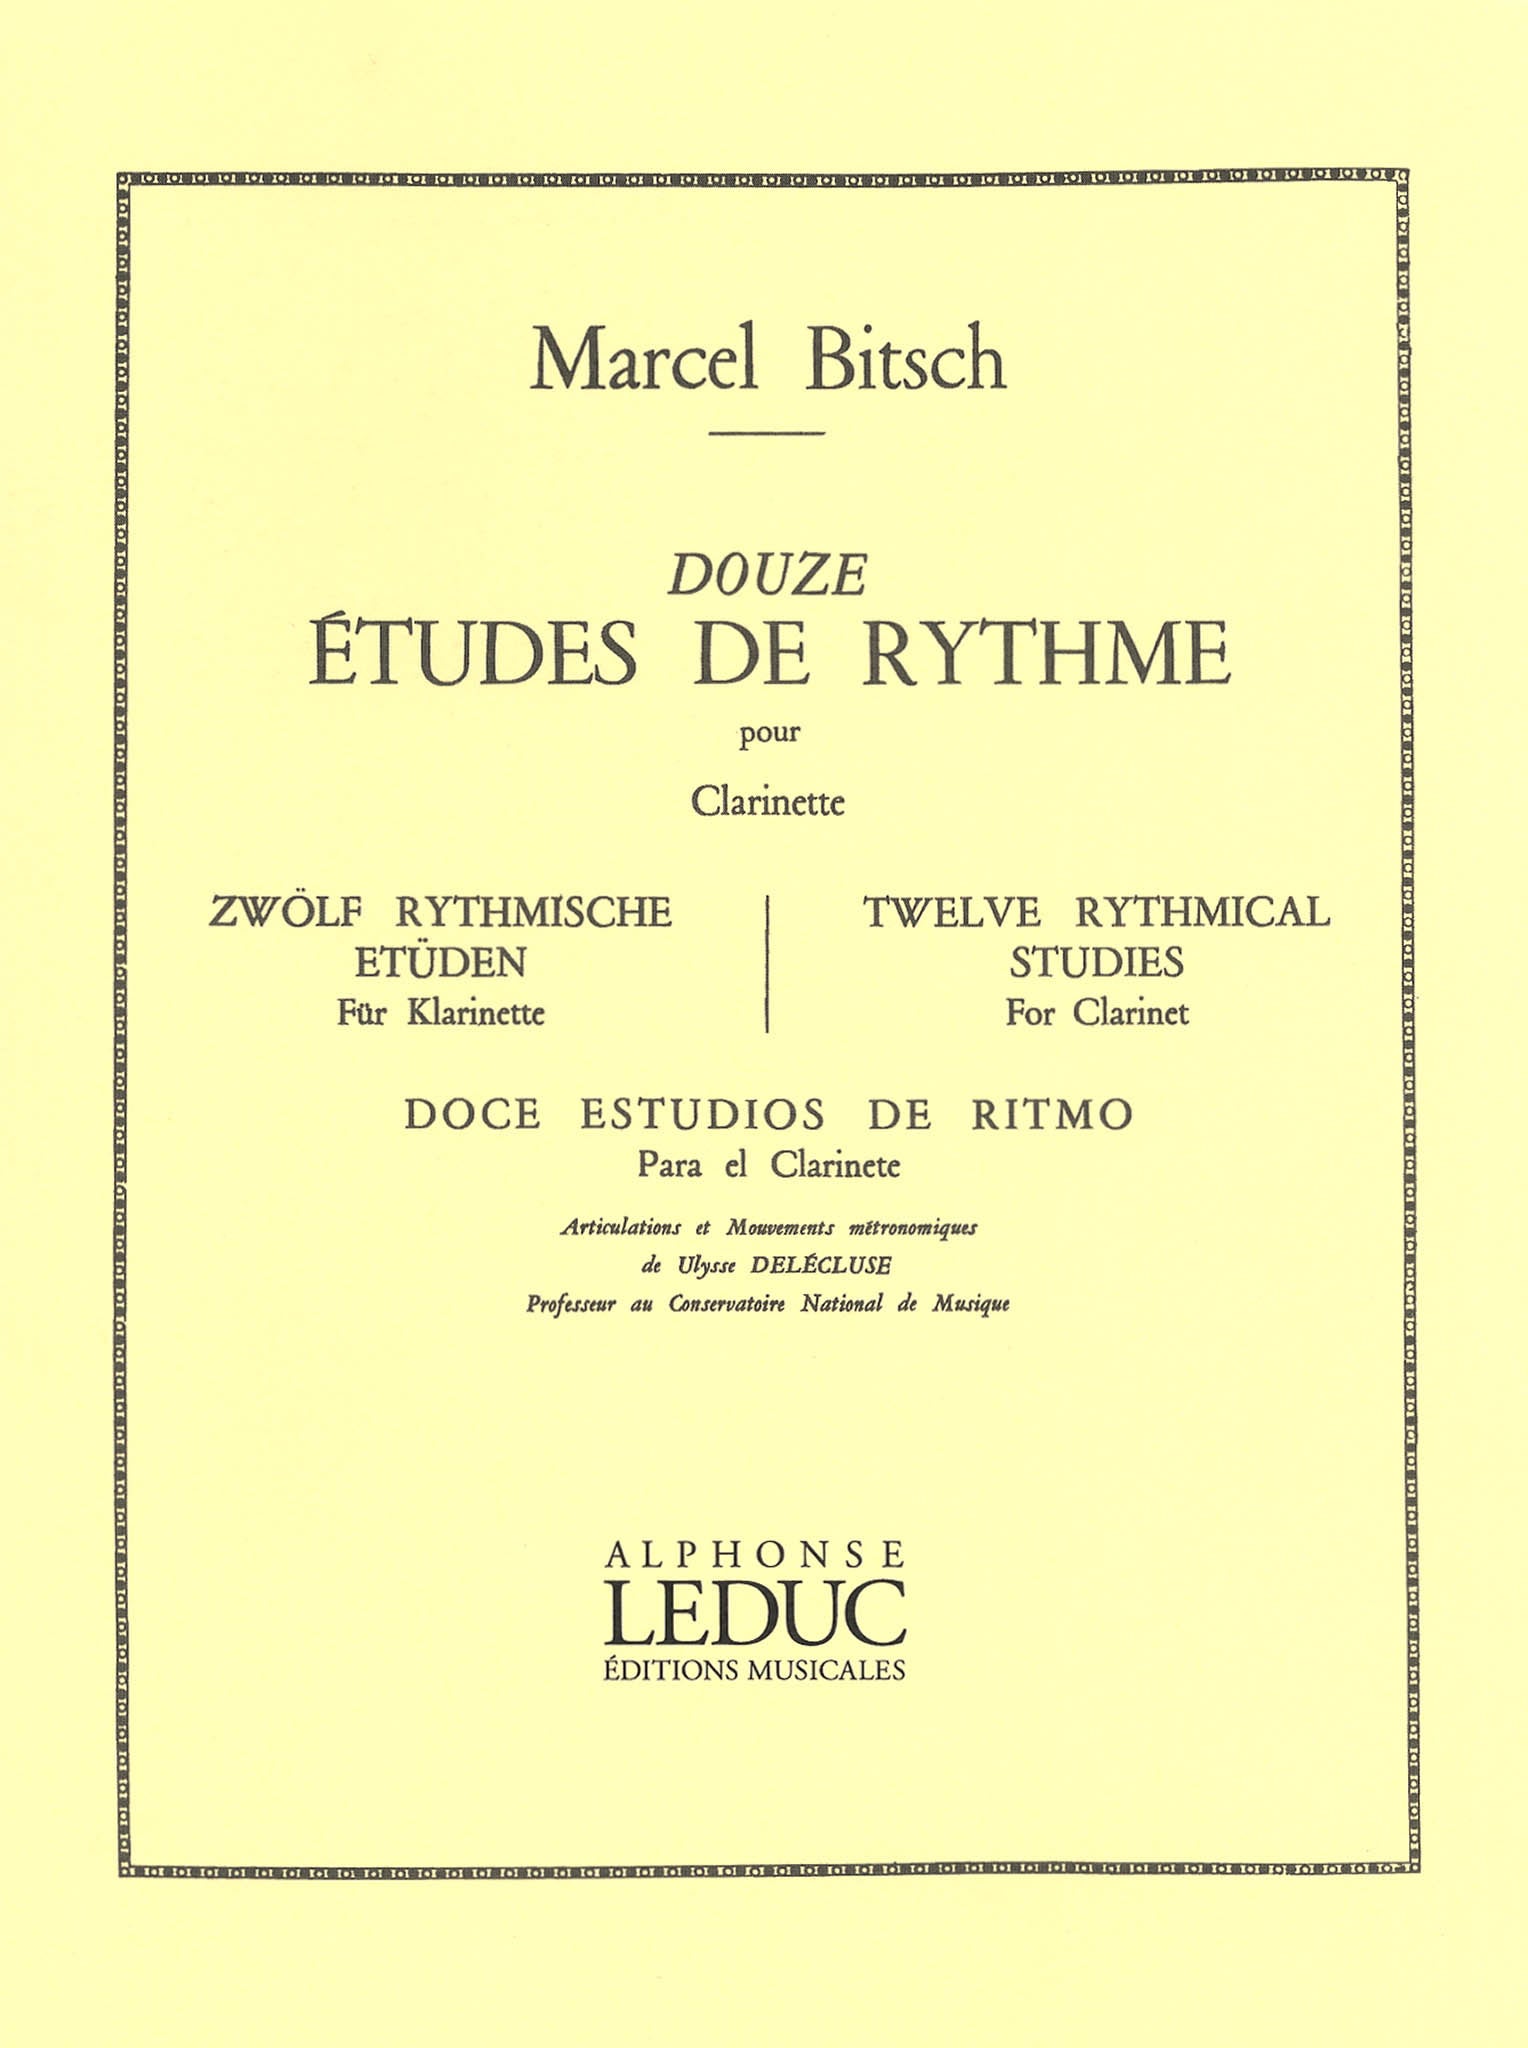 Marcel Bitsch 12 Études de rhythme for clarinet cover